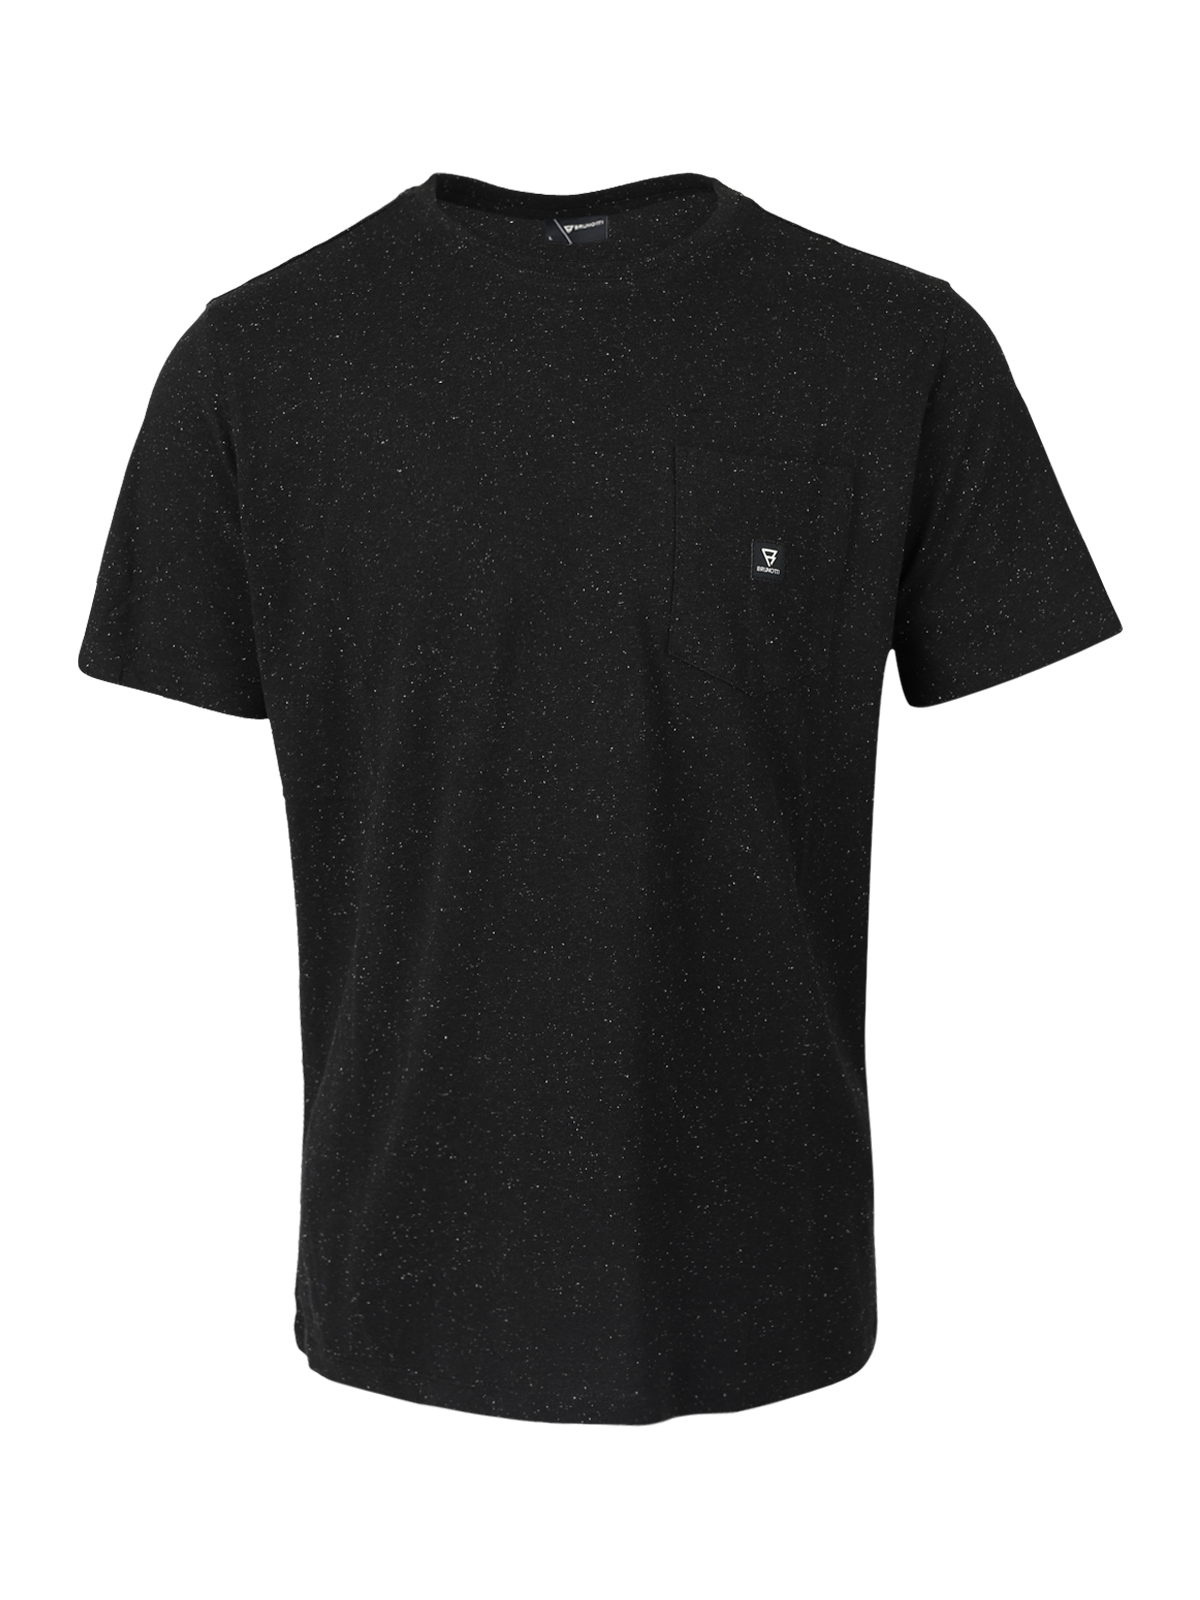 Axle-Neppy Herren T-Shirt | Schwarz